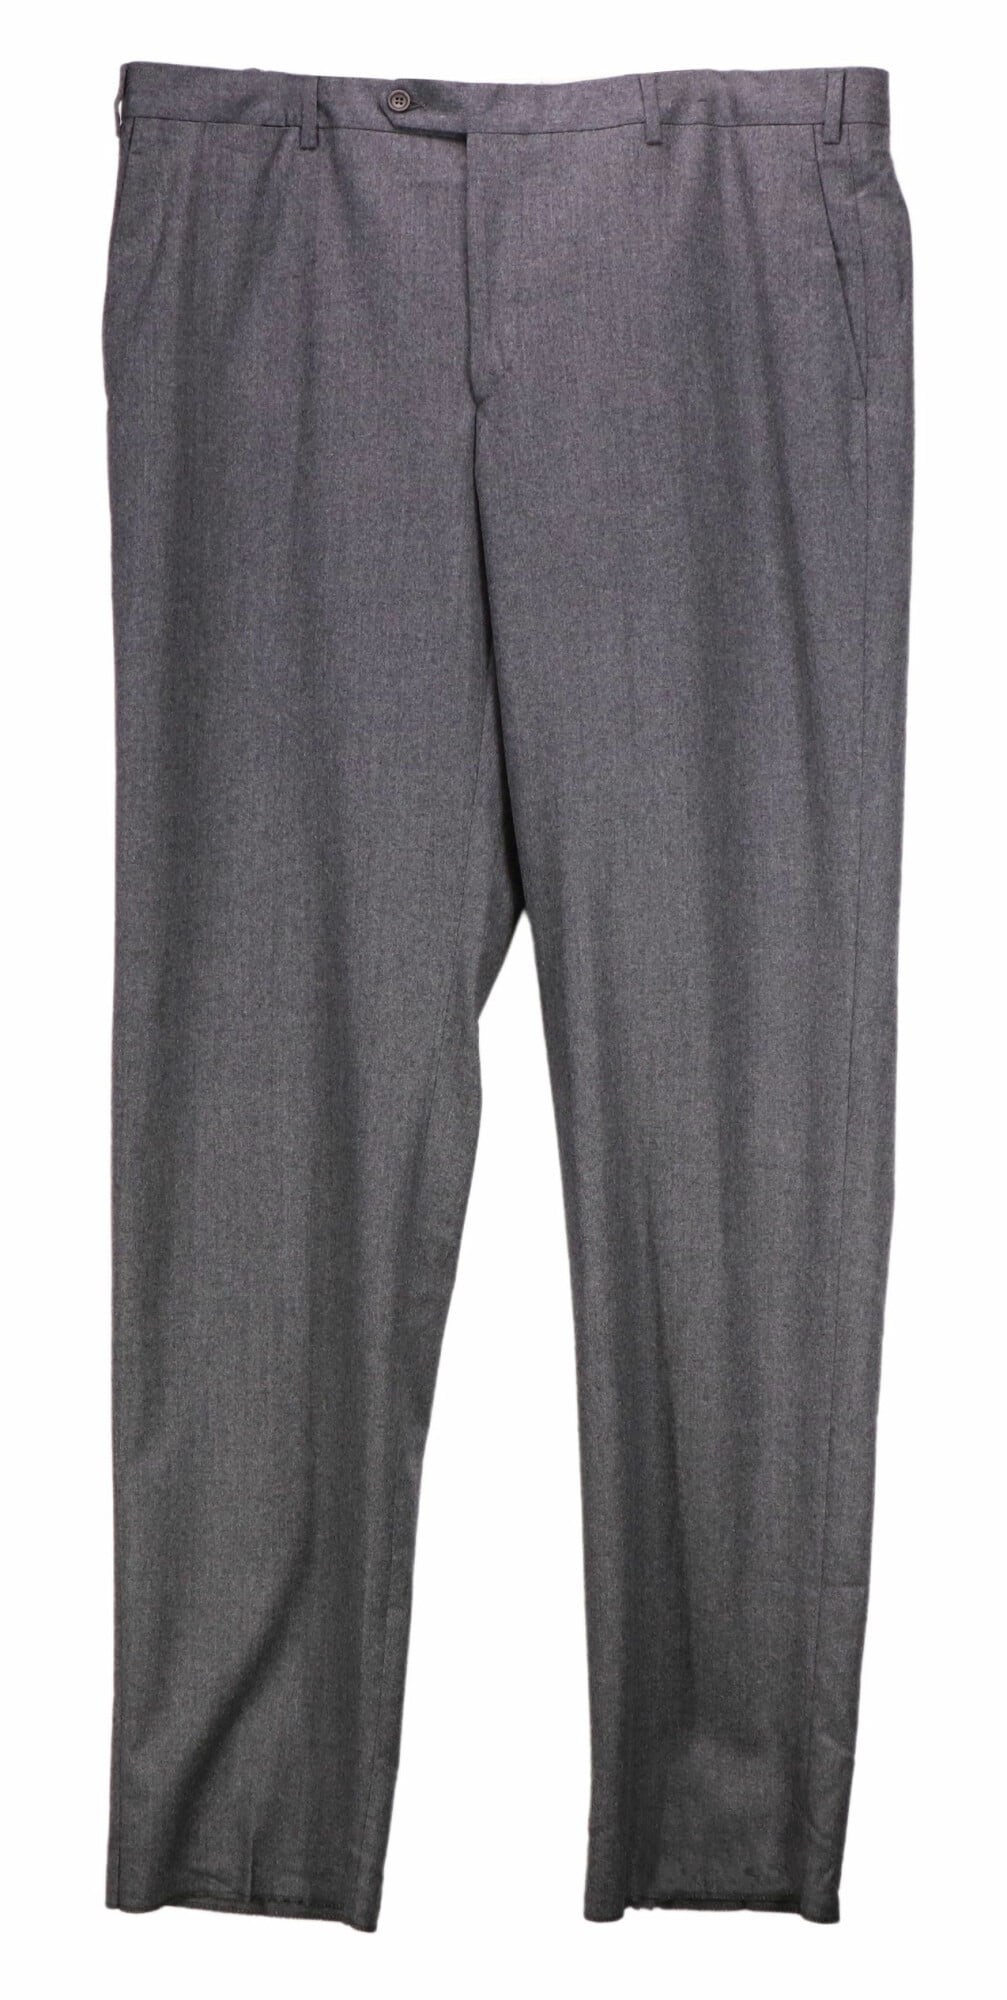 Trussini Men's Stone Grey Linea Classico Wool Dress Pant Pants & Capri ...